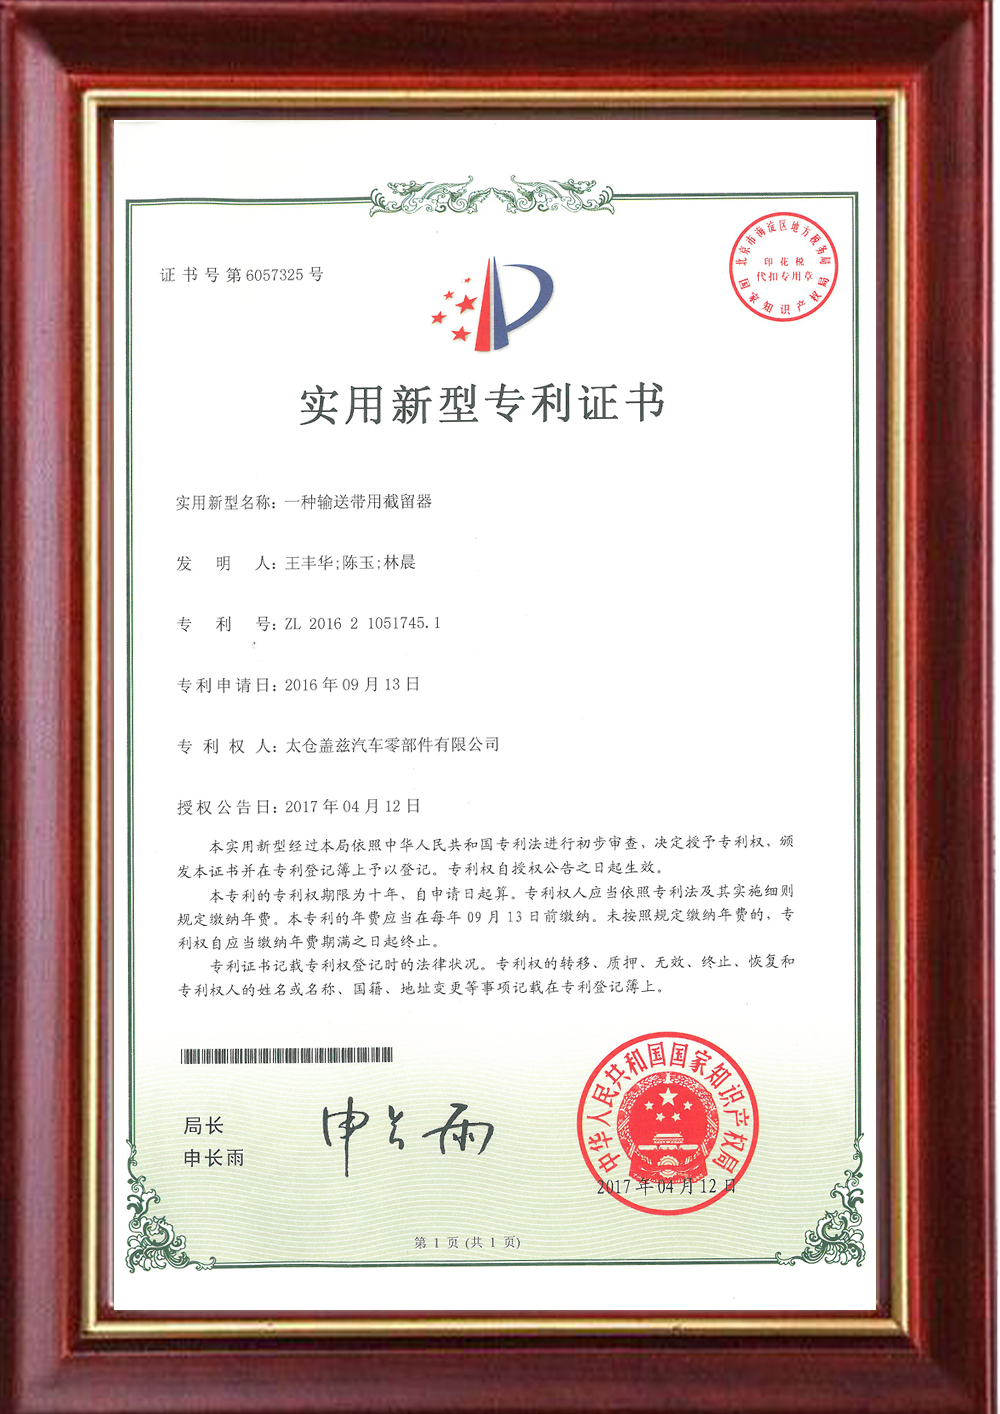 Utility model patent certificate - retractor